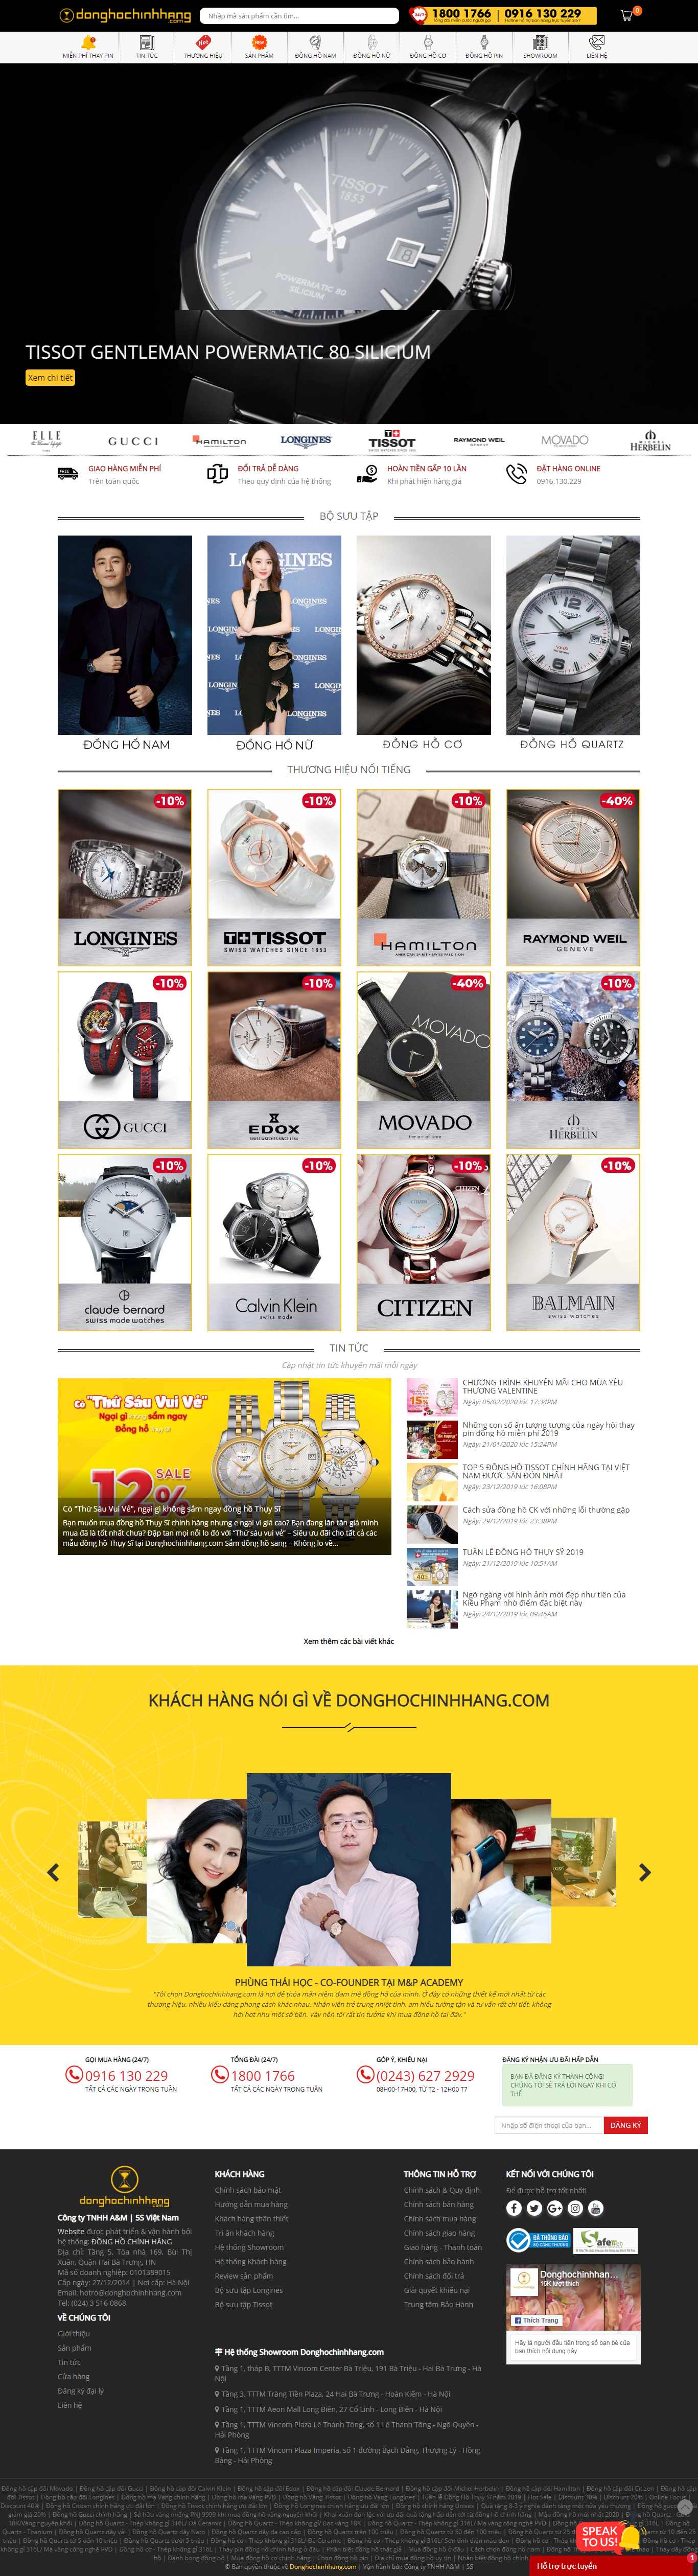 Thiết kế Website shop đồng hồ - donghochinhhang.com